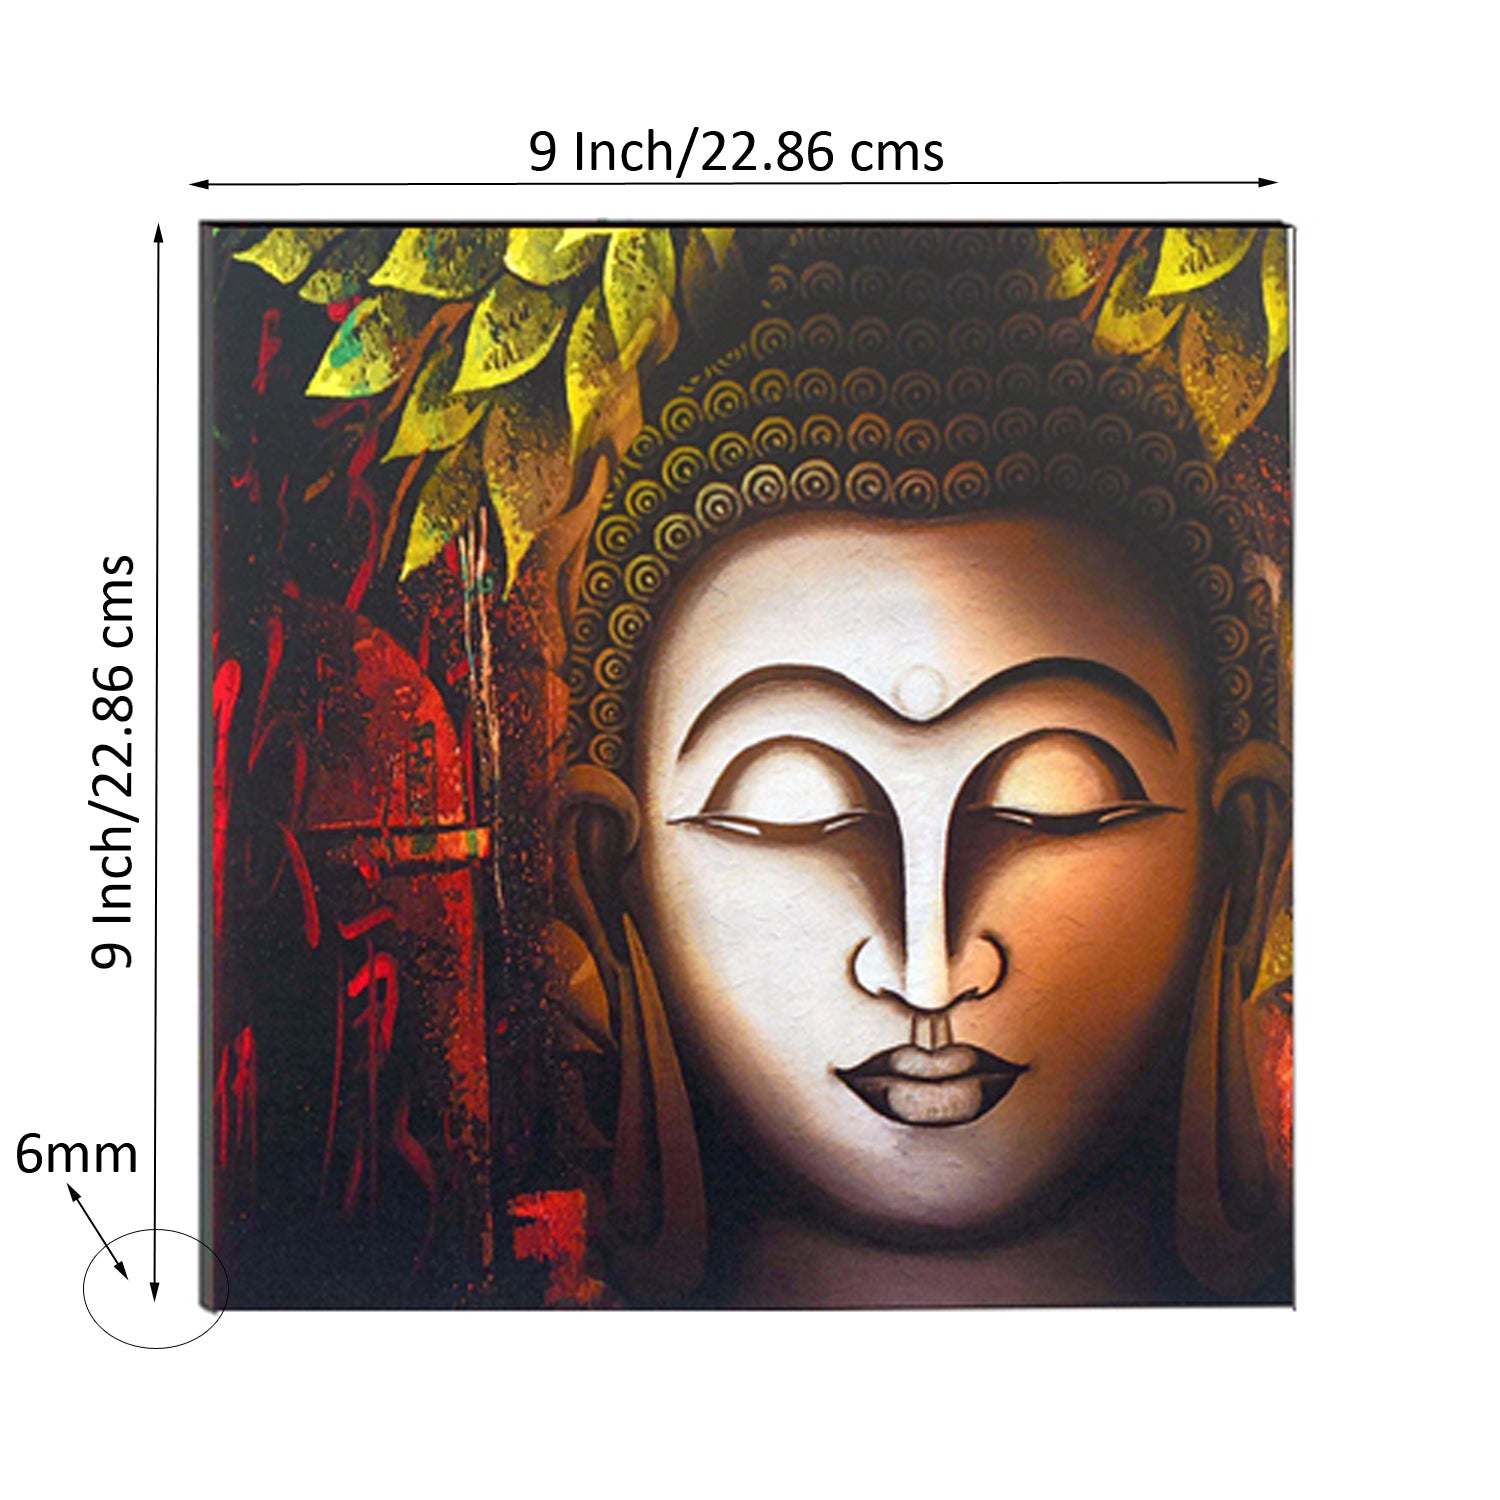 Meditating Lord Buddha Painting Digital Printed Religious Wall Art 2